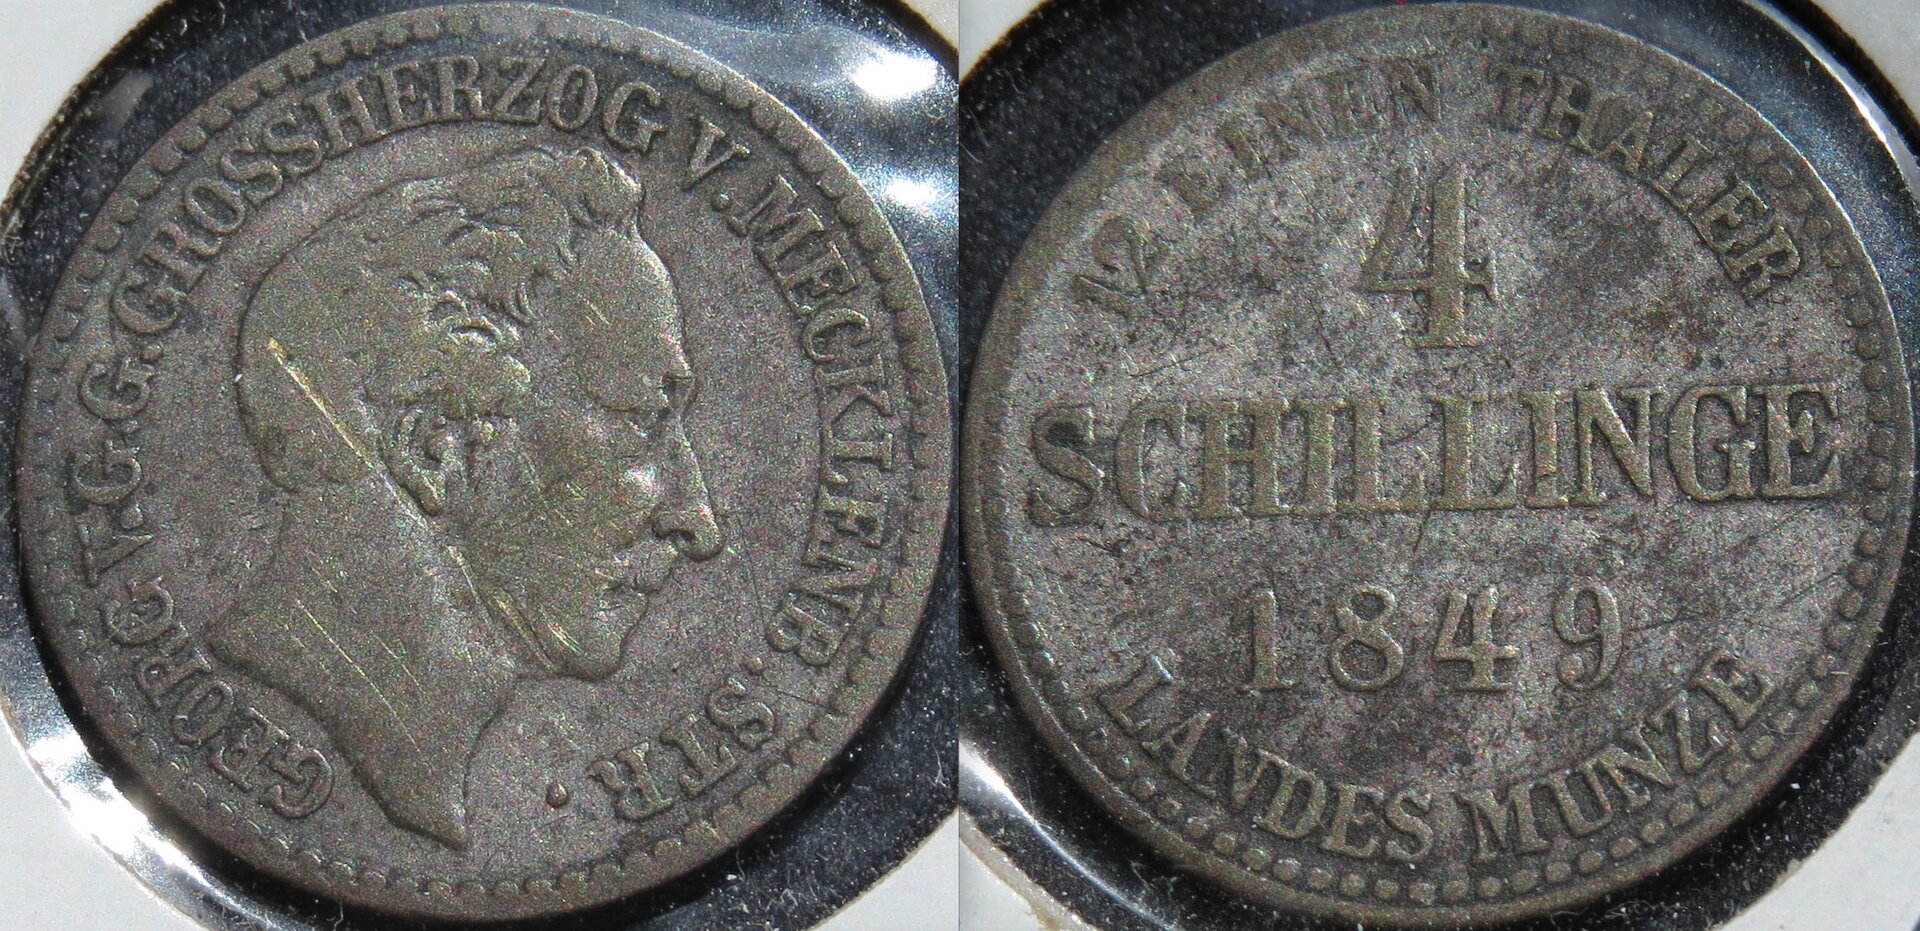 Meklenburg-Strelitz 1849 4 Schillinge Georg 0.375 billon copy 2.jpeg